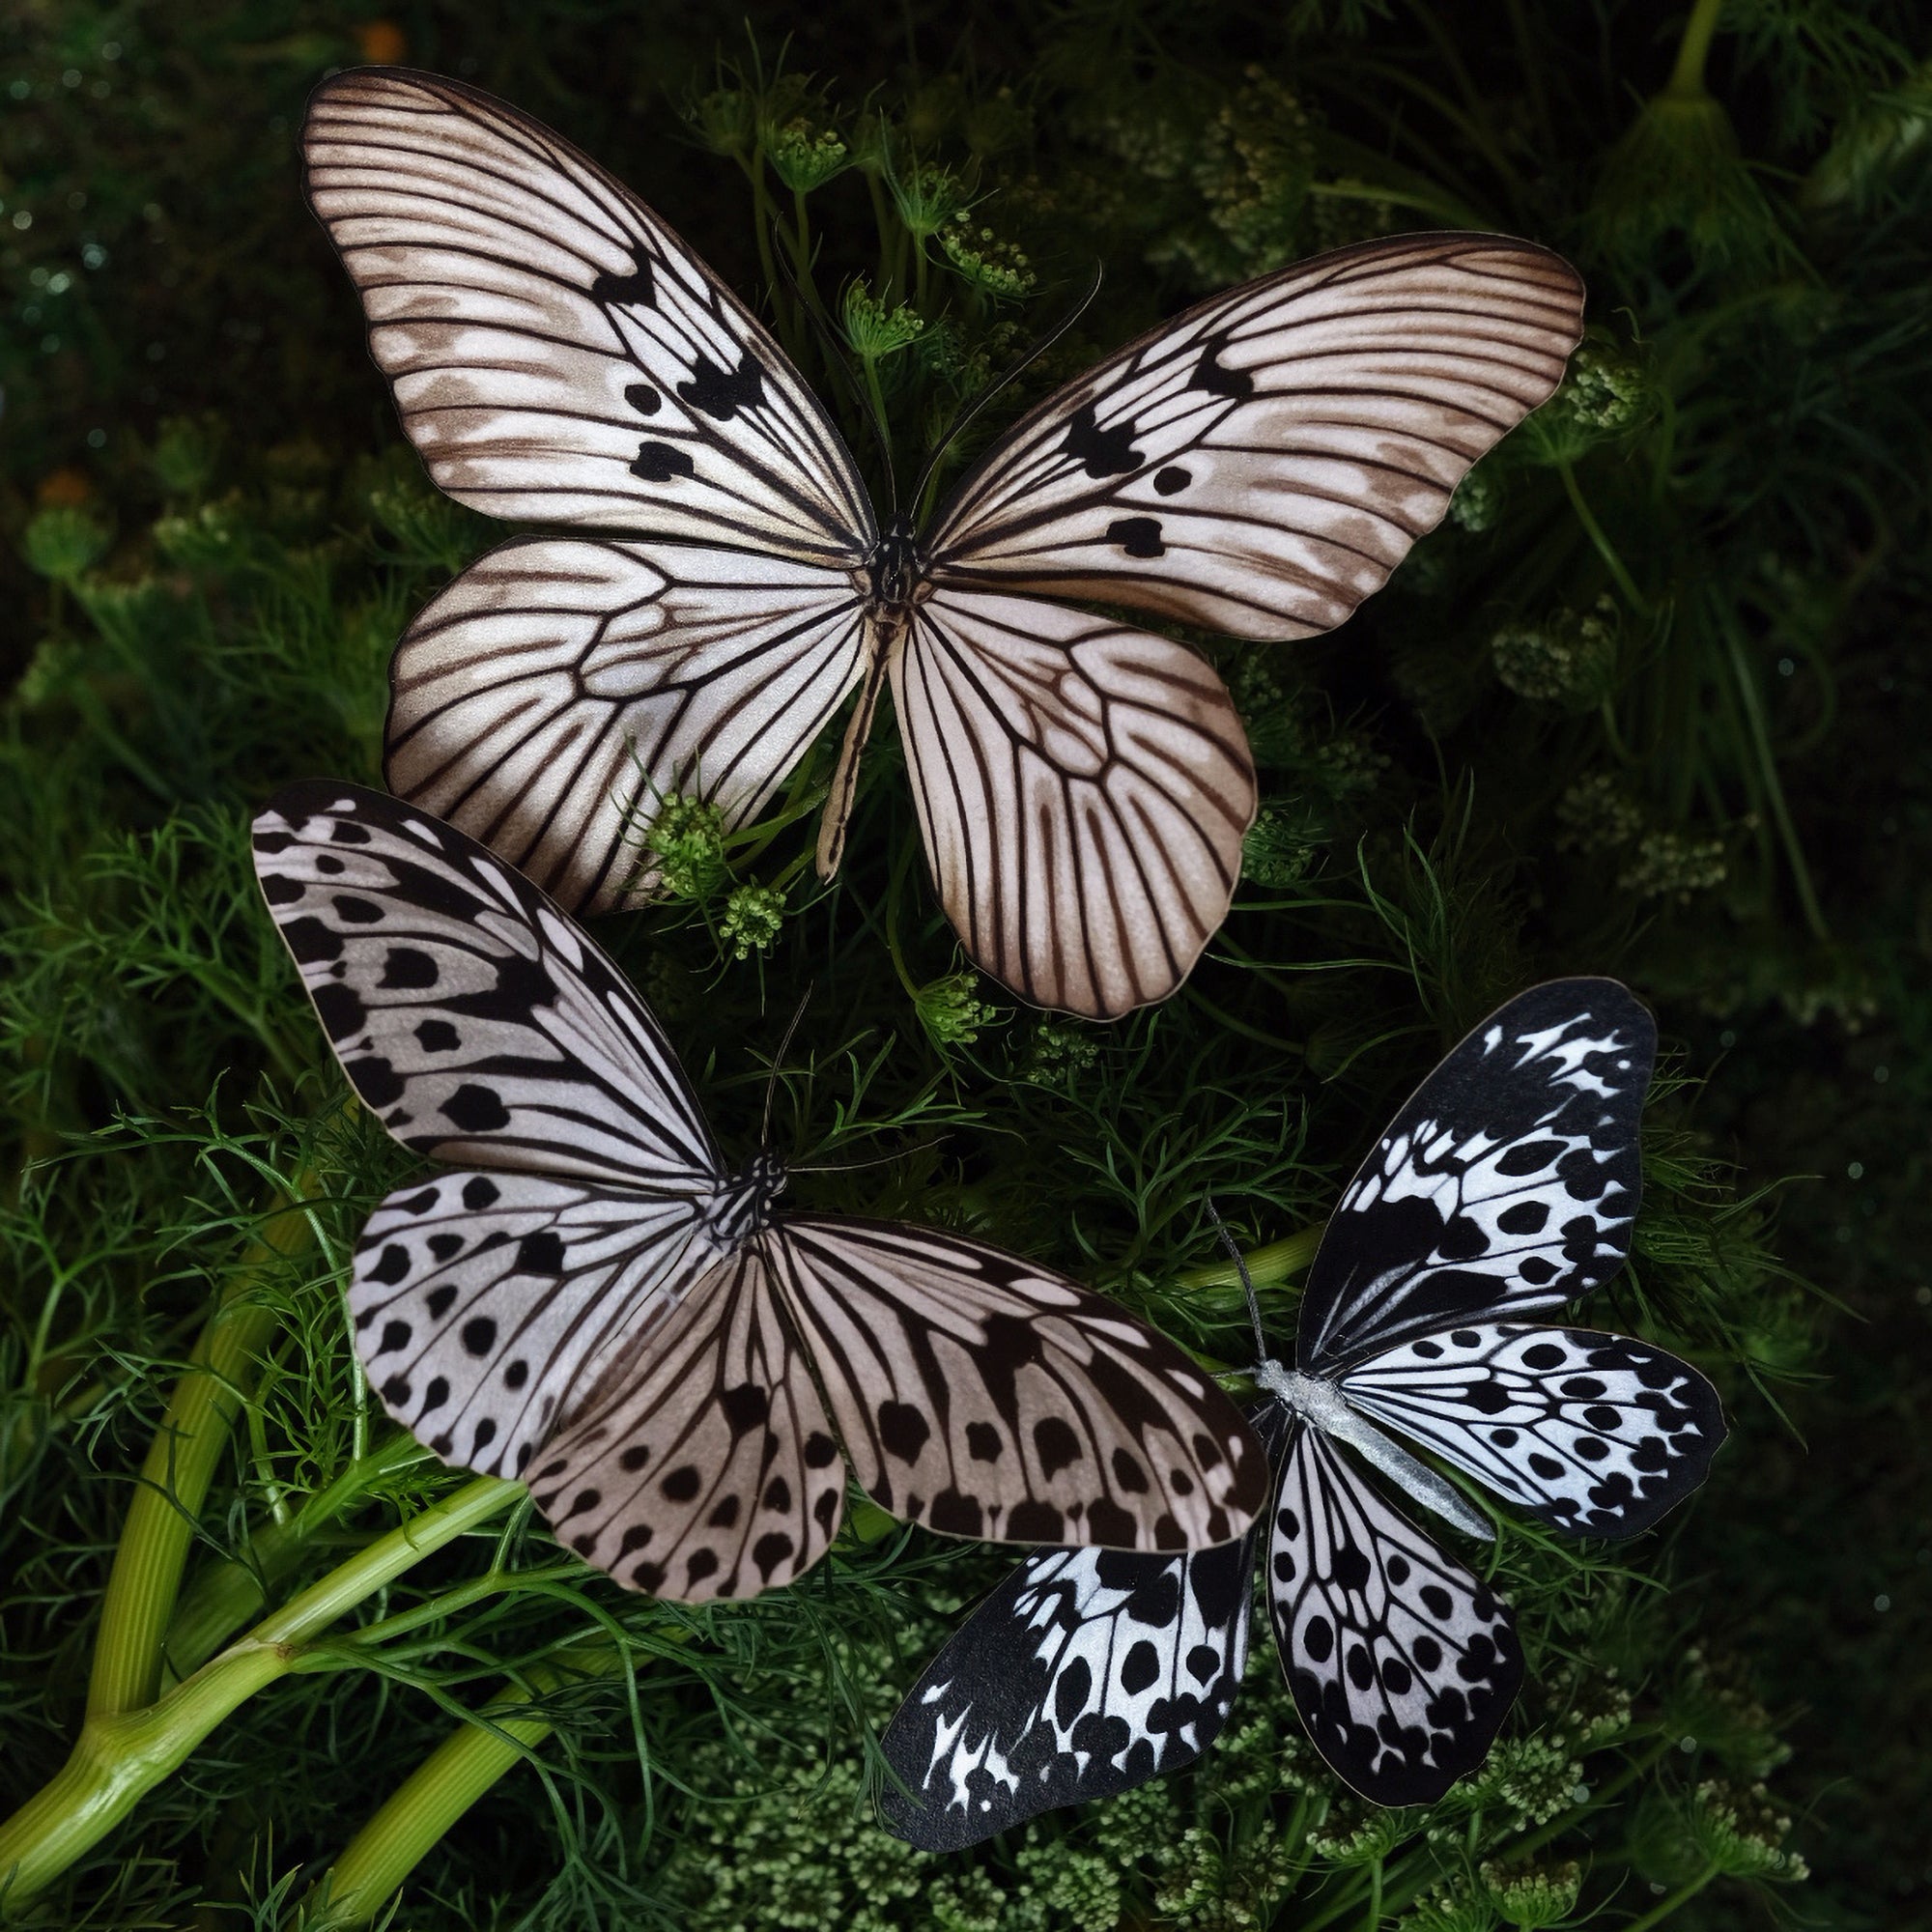 'Blanchard's Ghost' Butterfly